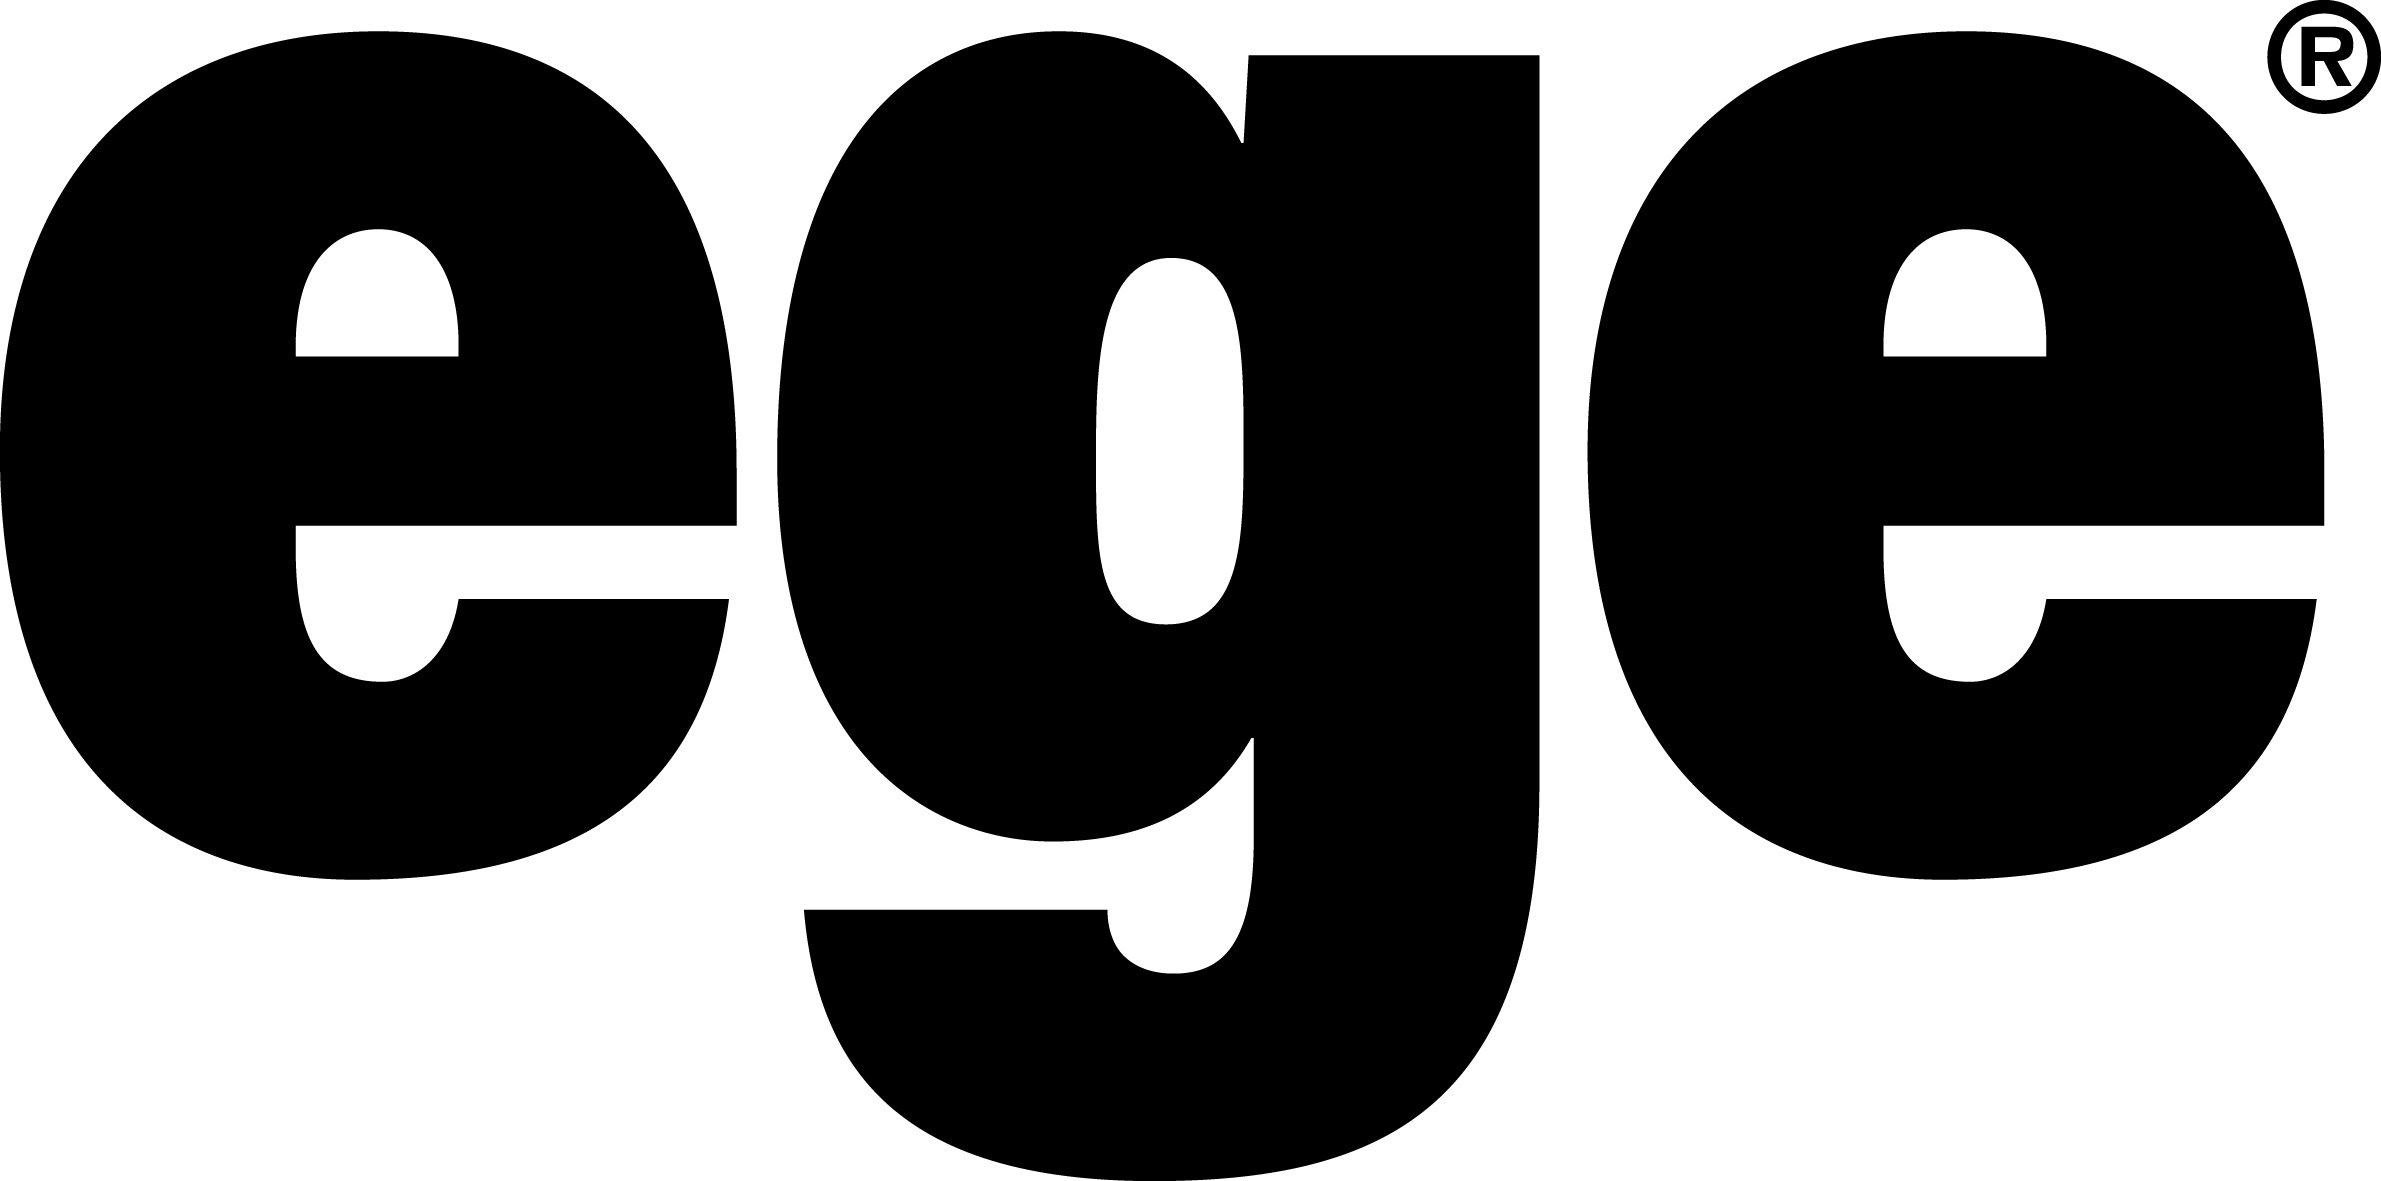 ege_logo_black.jpg